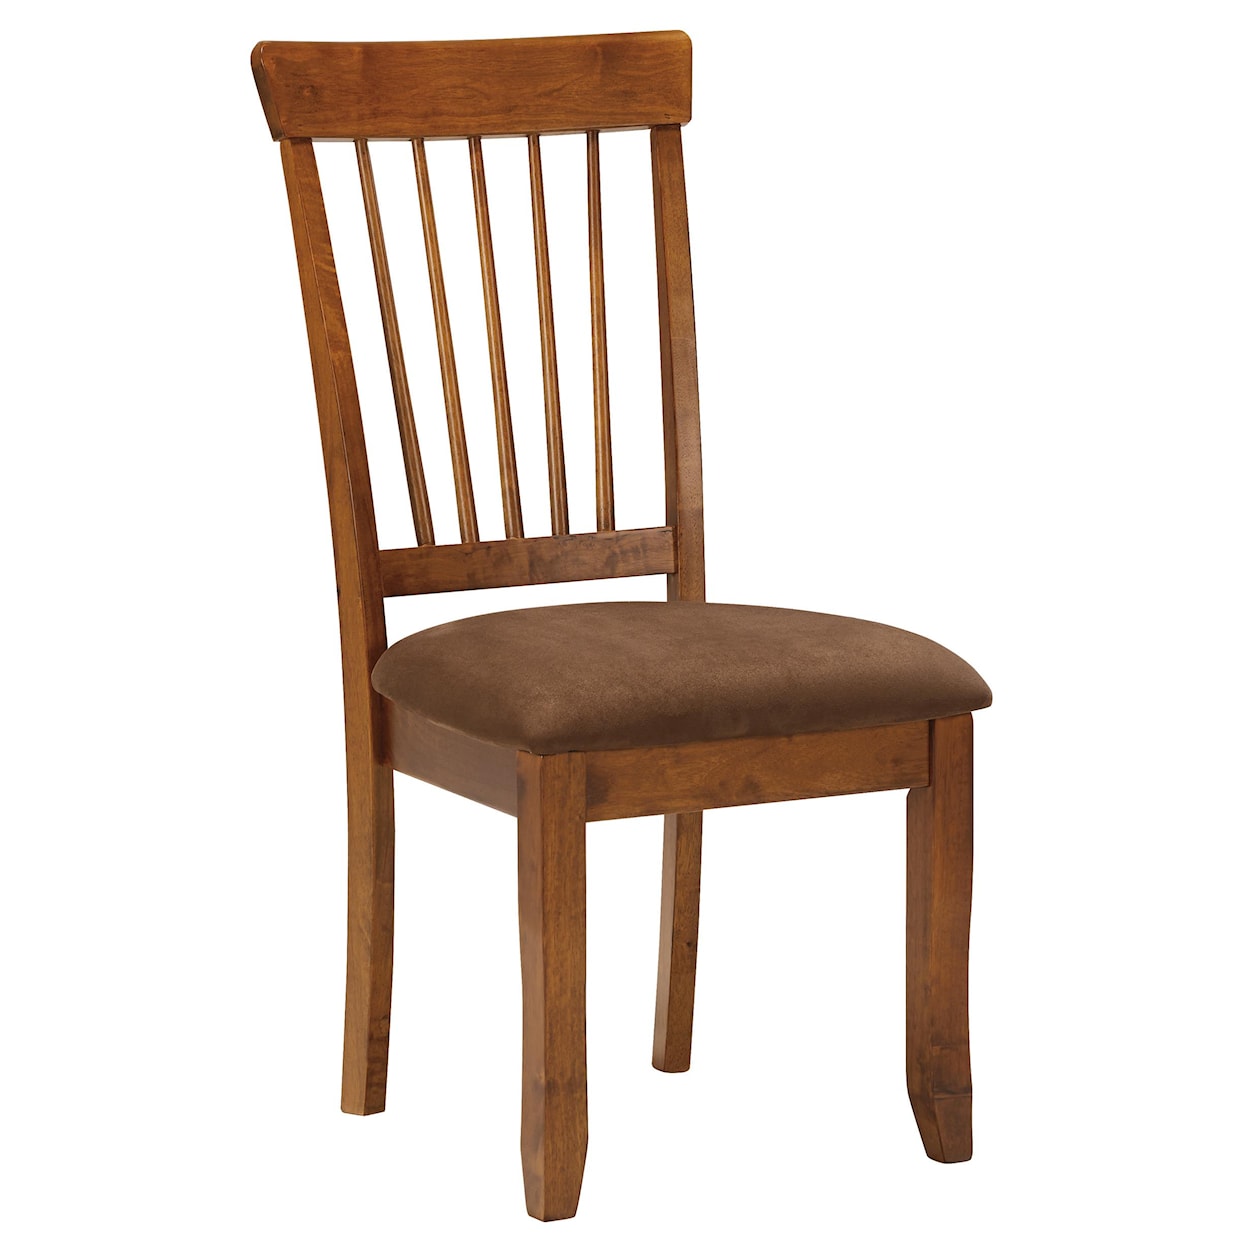 Ashley Furniture Berringer Dining Side Chair